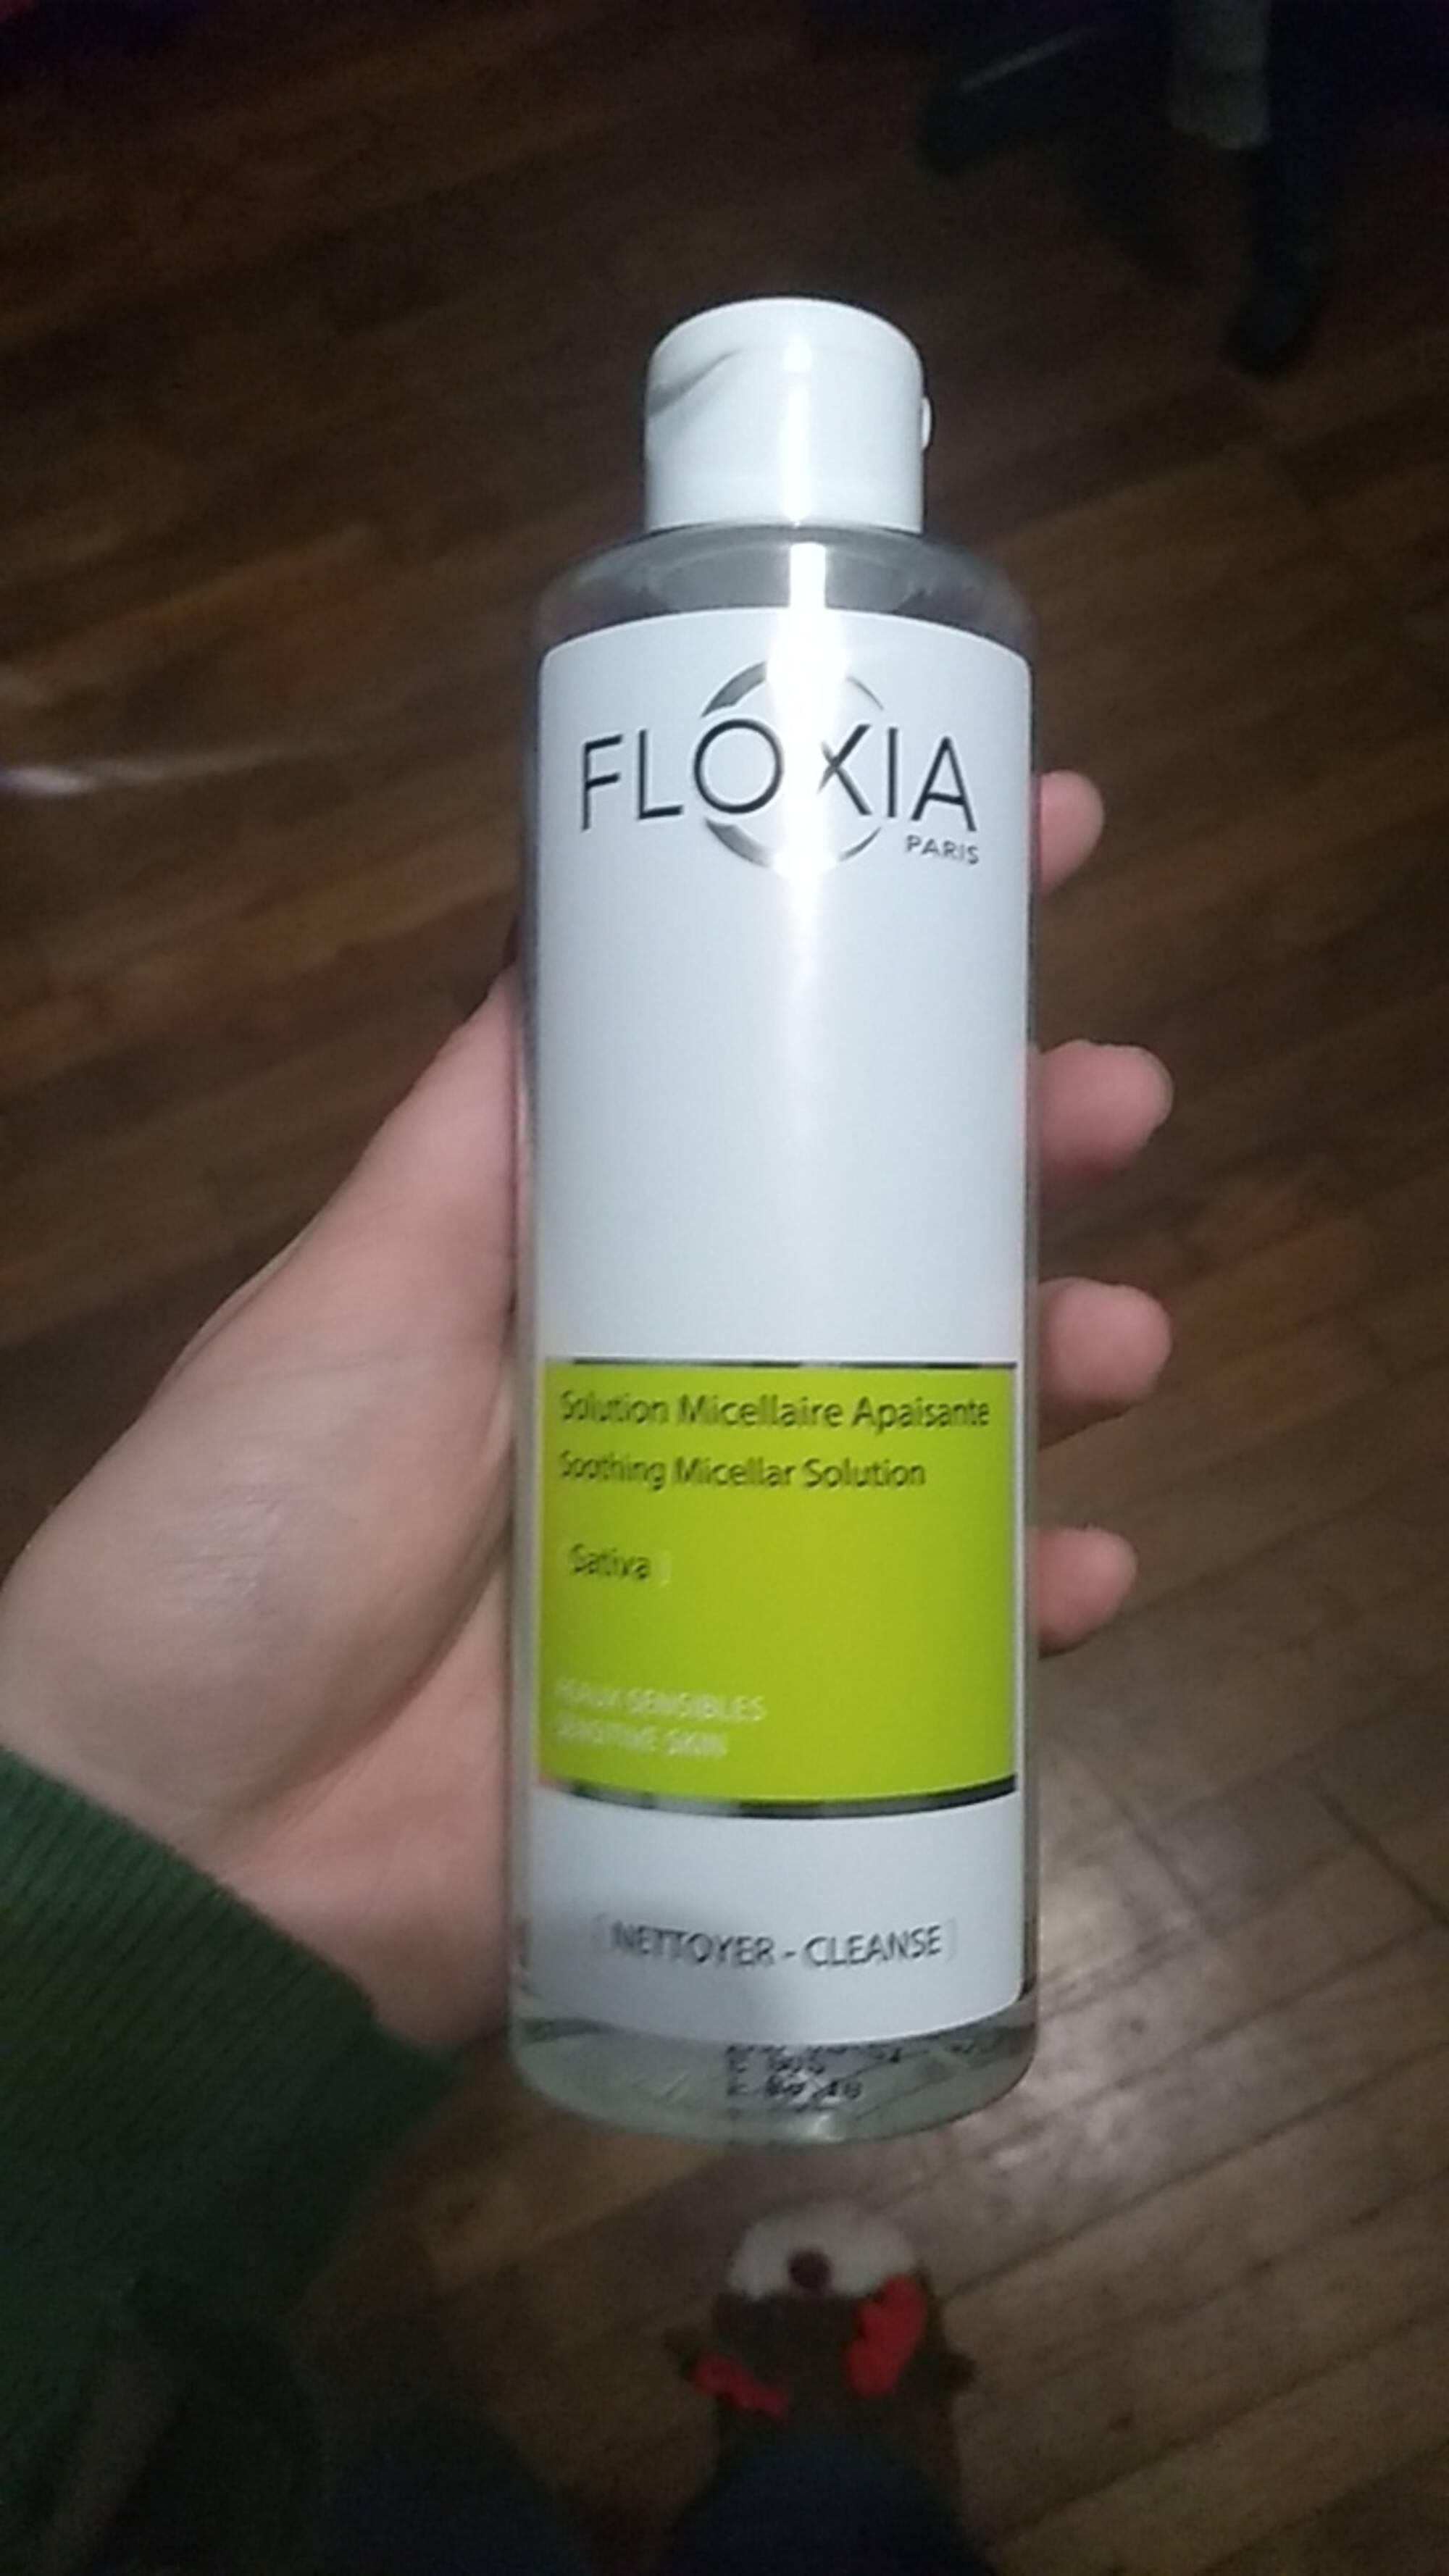 FLOXIA - Solution micellaire apaisante